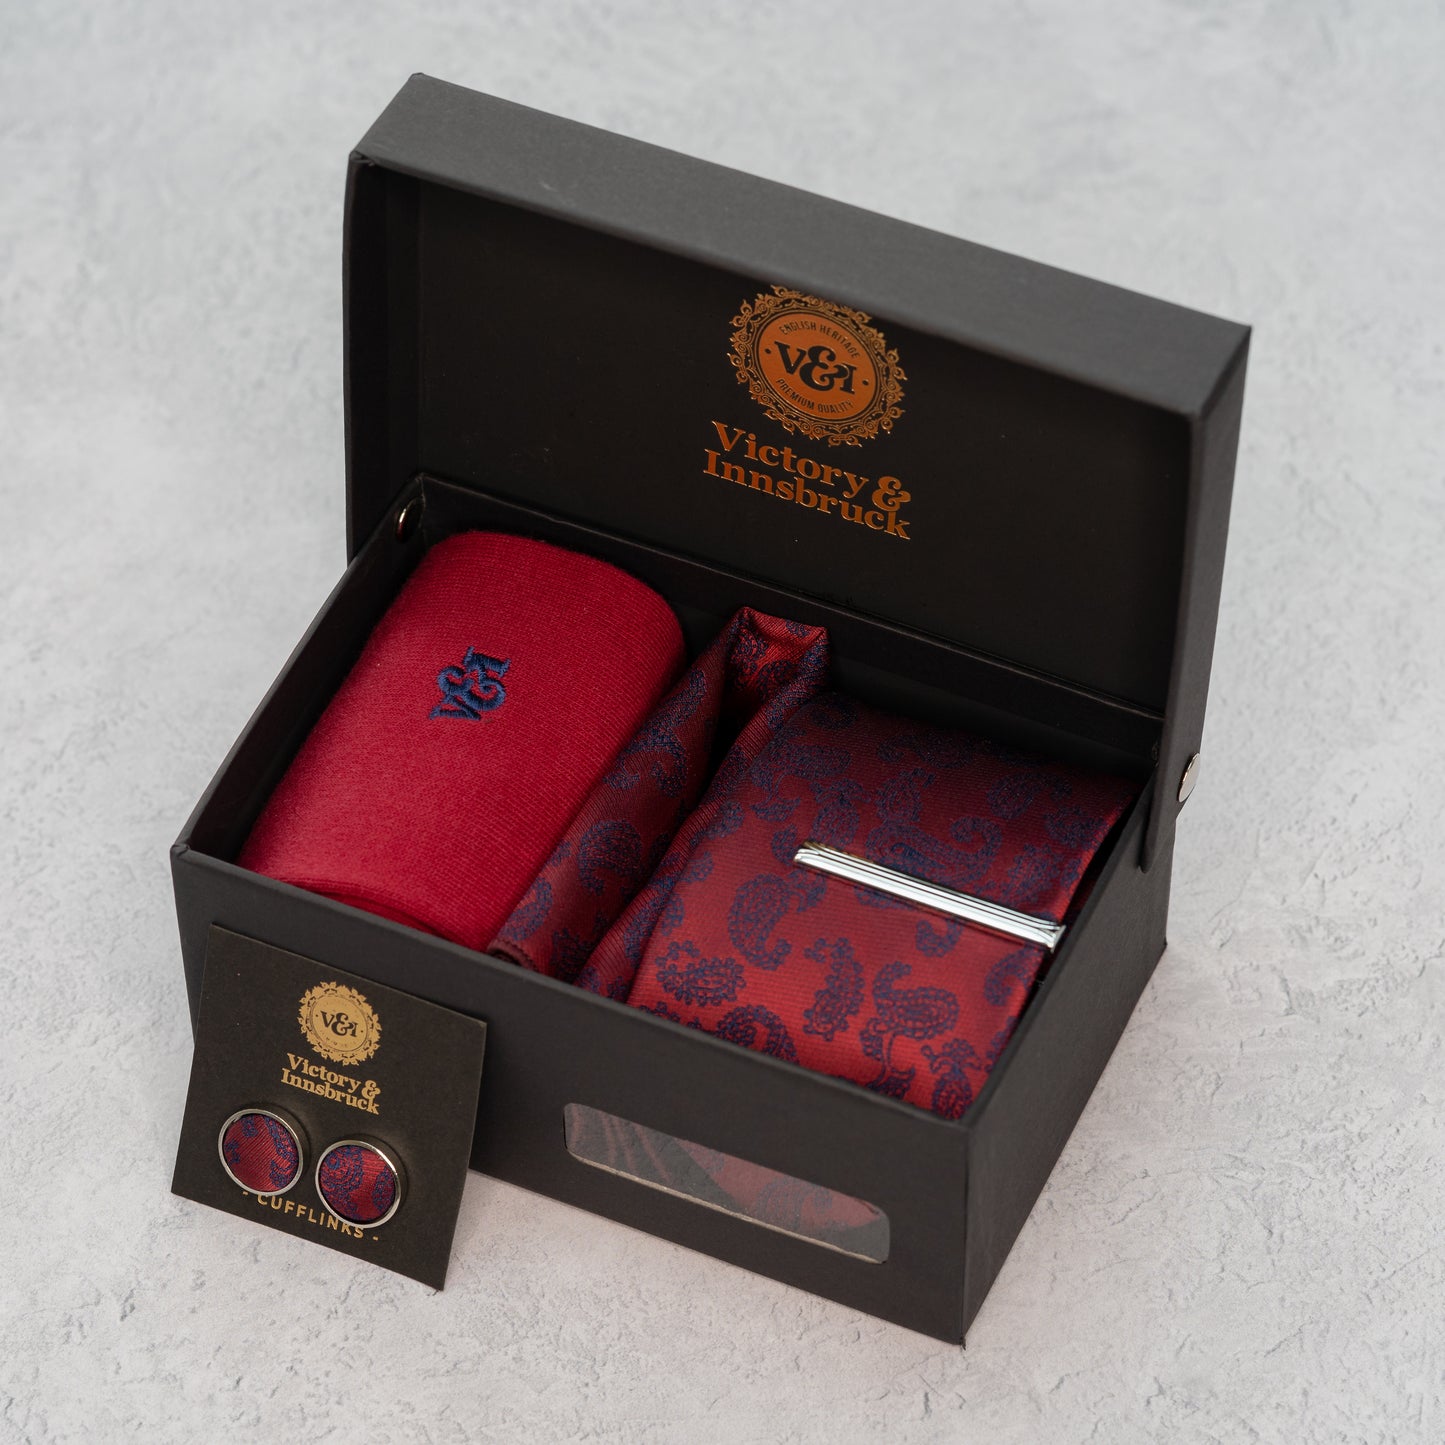 Signature Red Paisley Tie Box Set